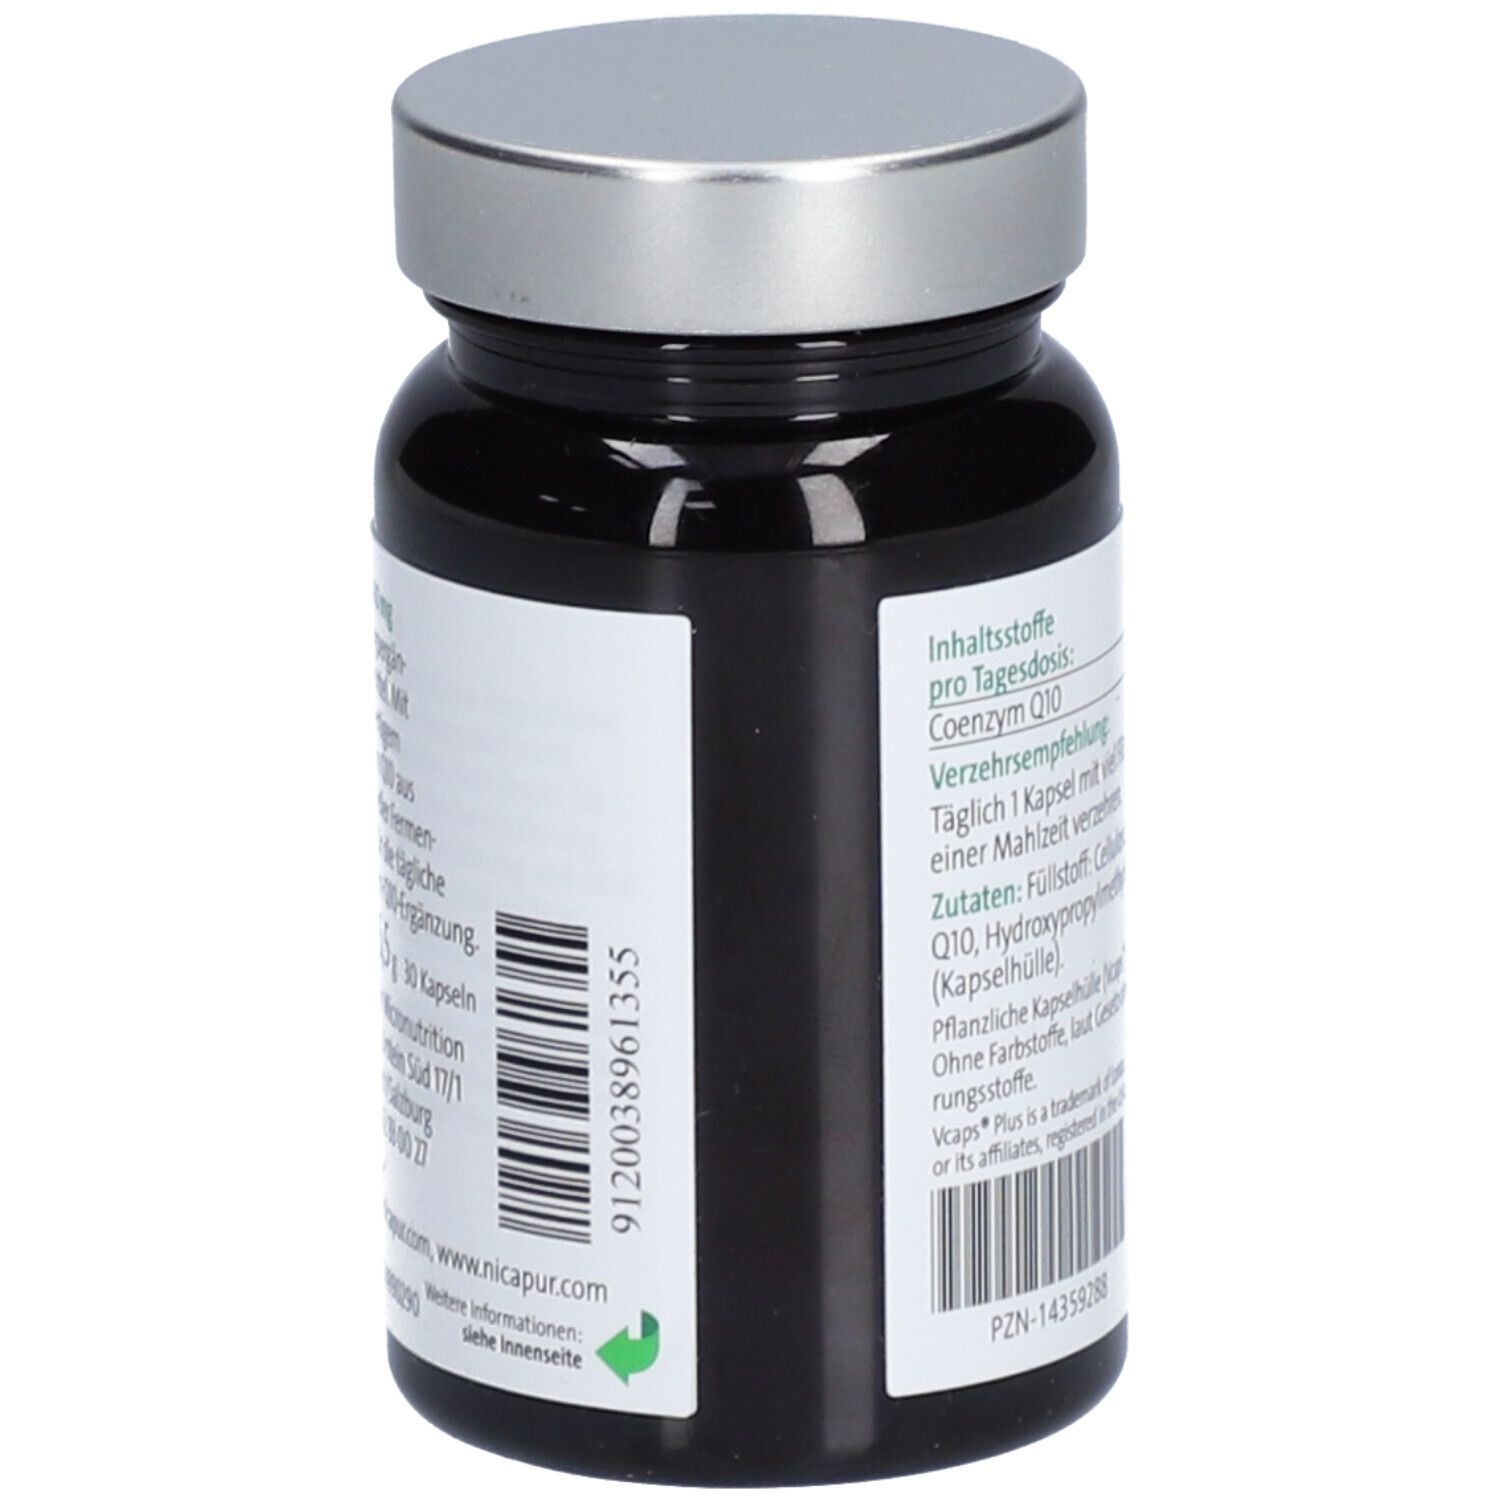 NICApur® CoQ10 60 mg